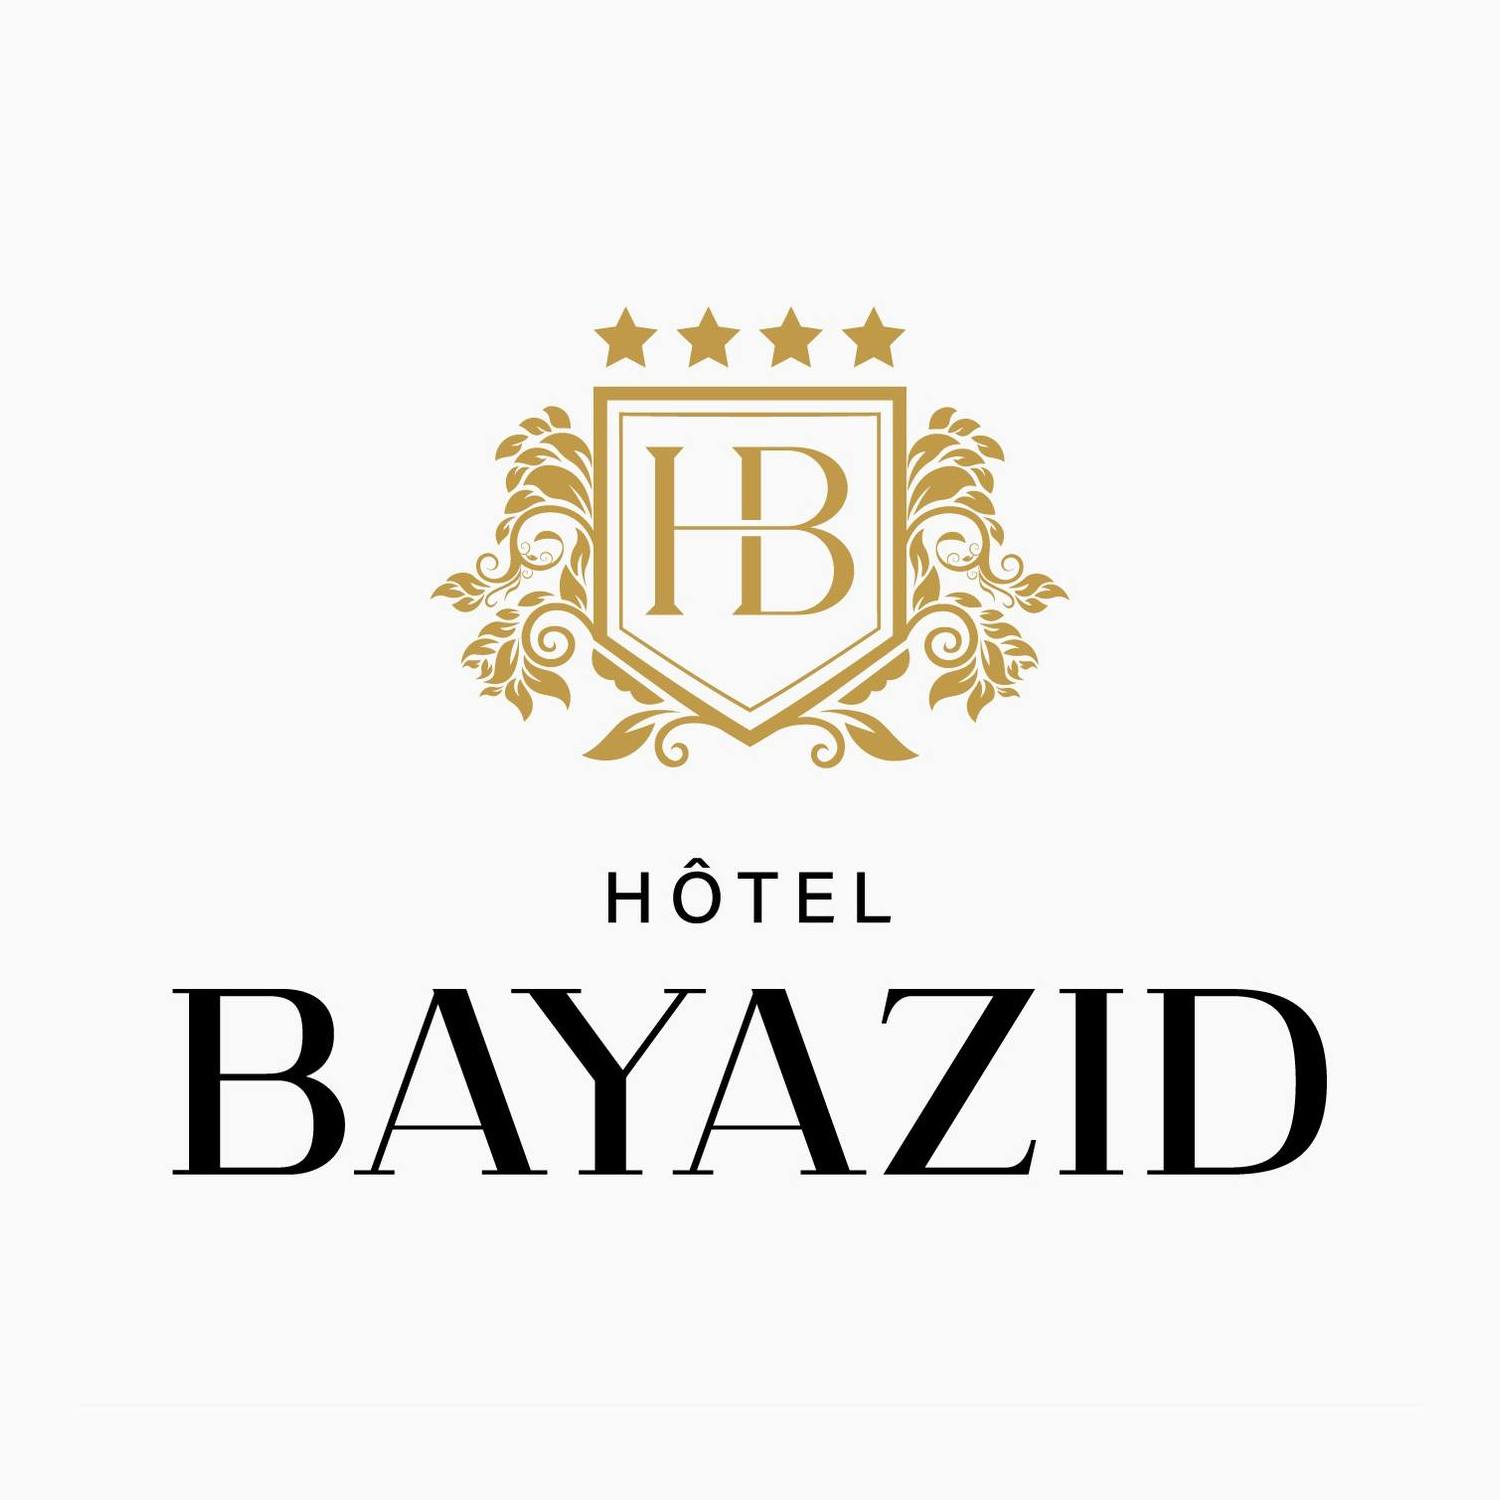 HOTEL BAYAZID image